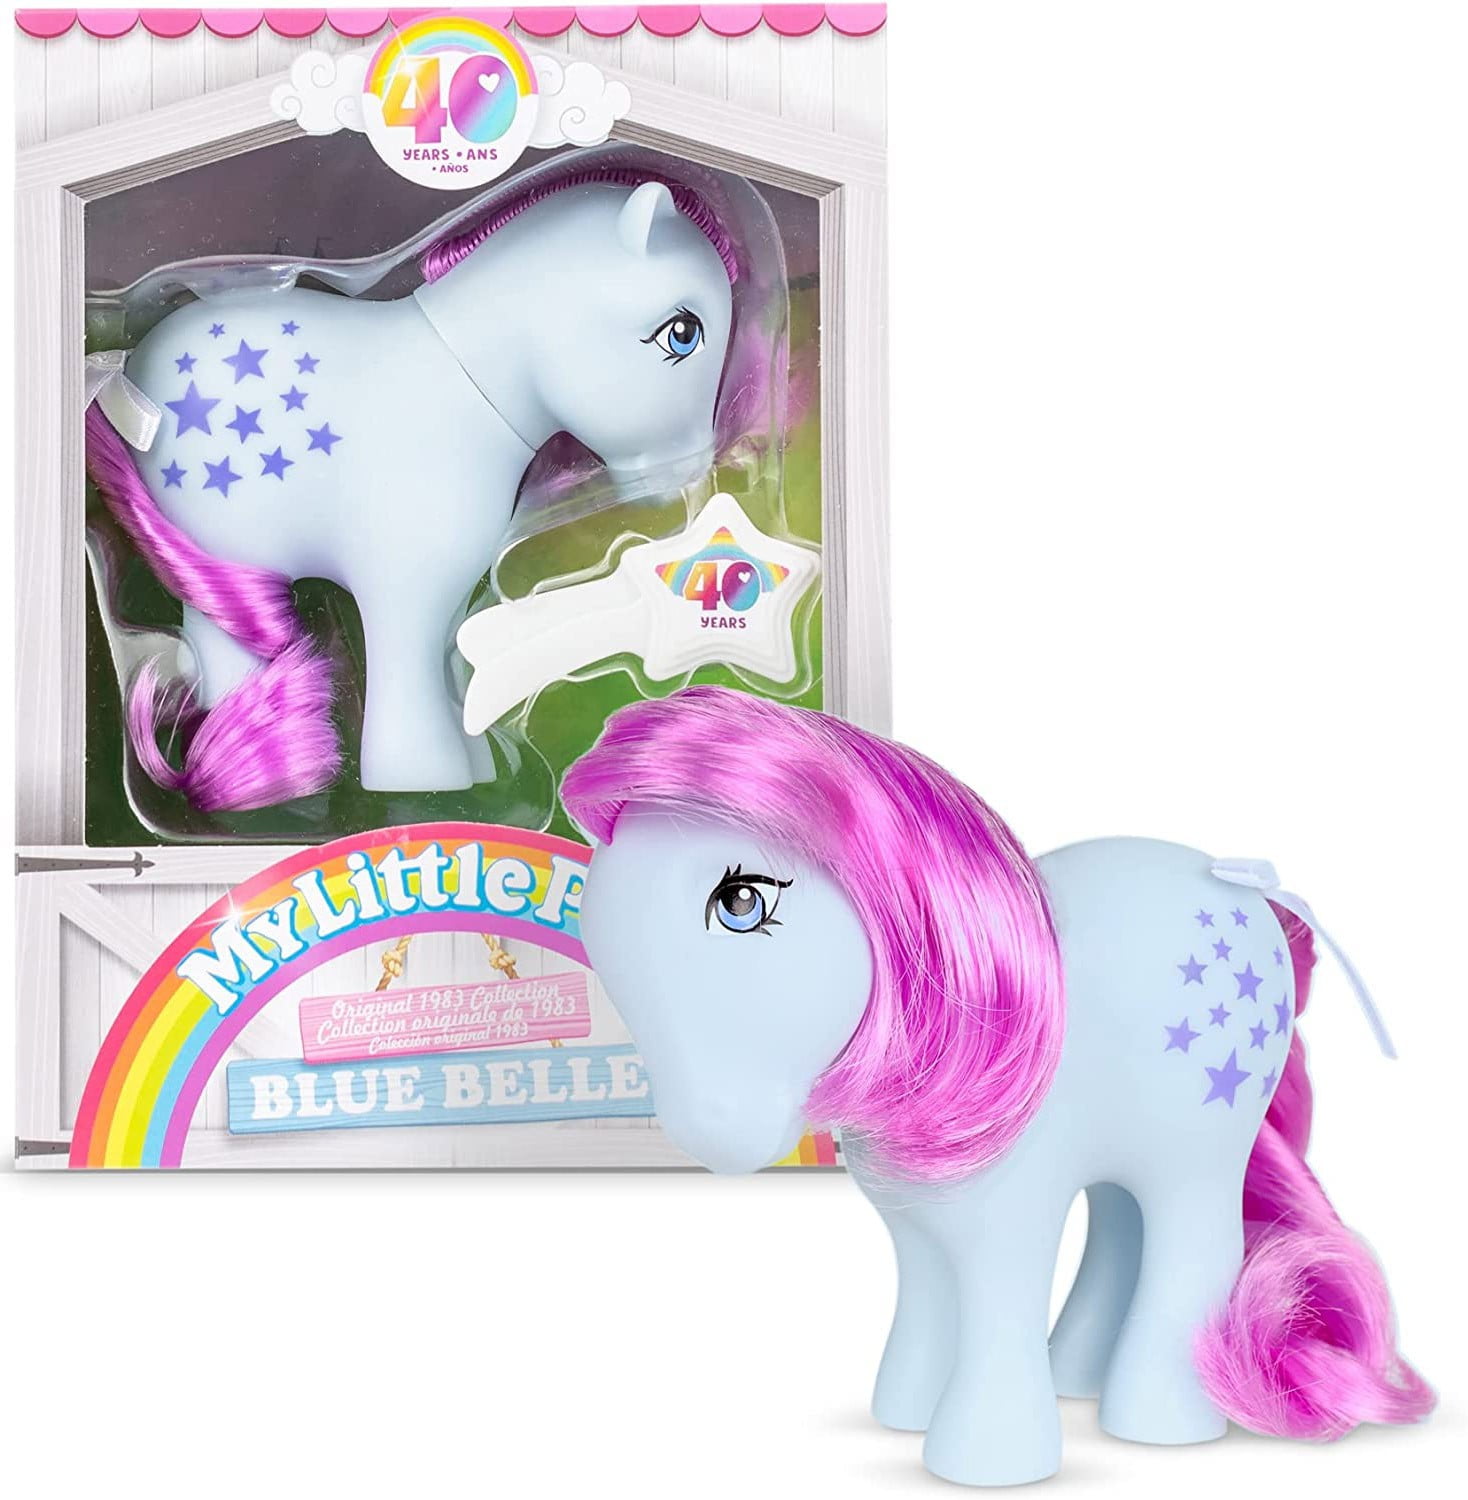 Blue belle Classic Pony, My Little Pony, Basic Fun, 35322, cadeaux